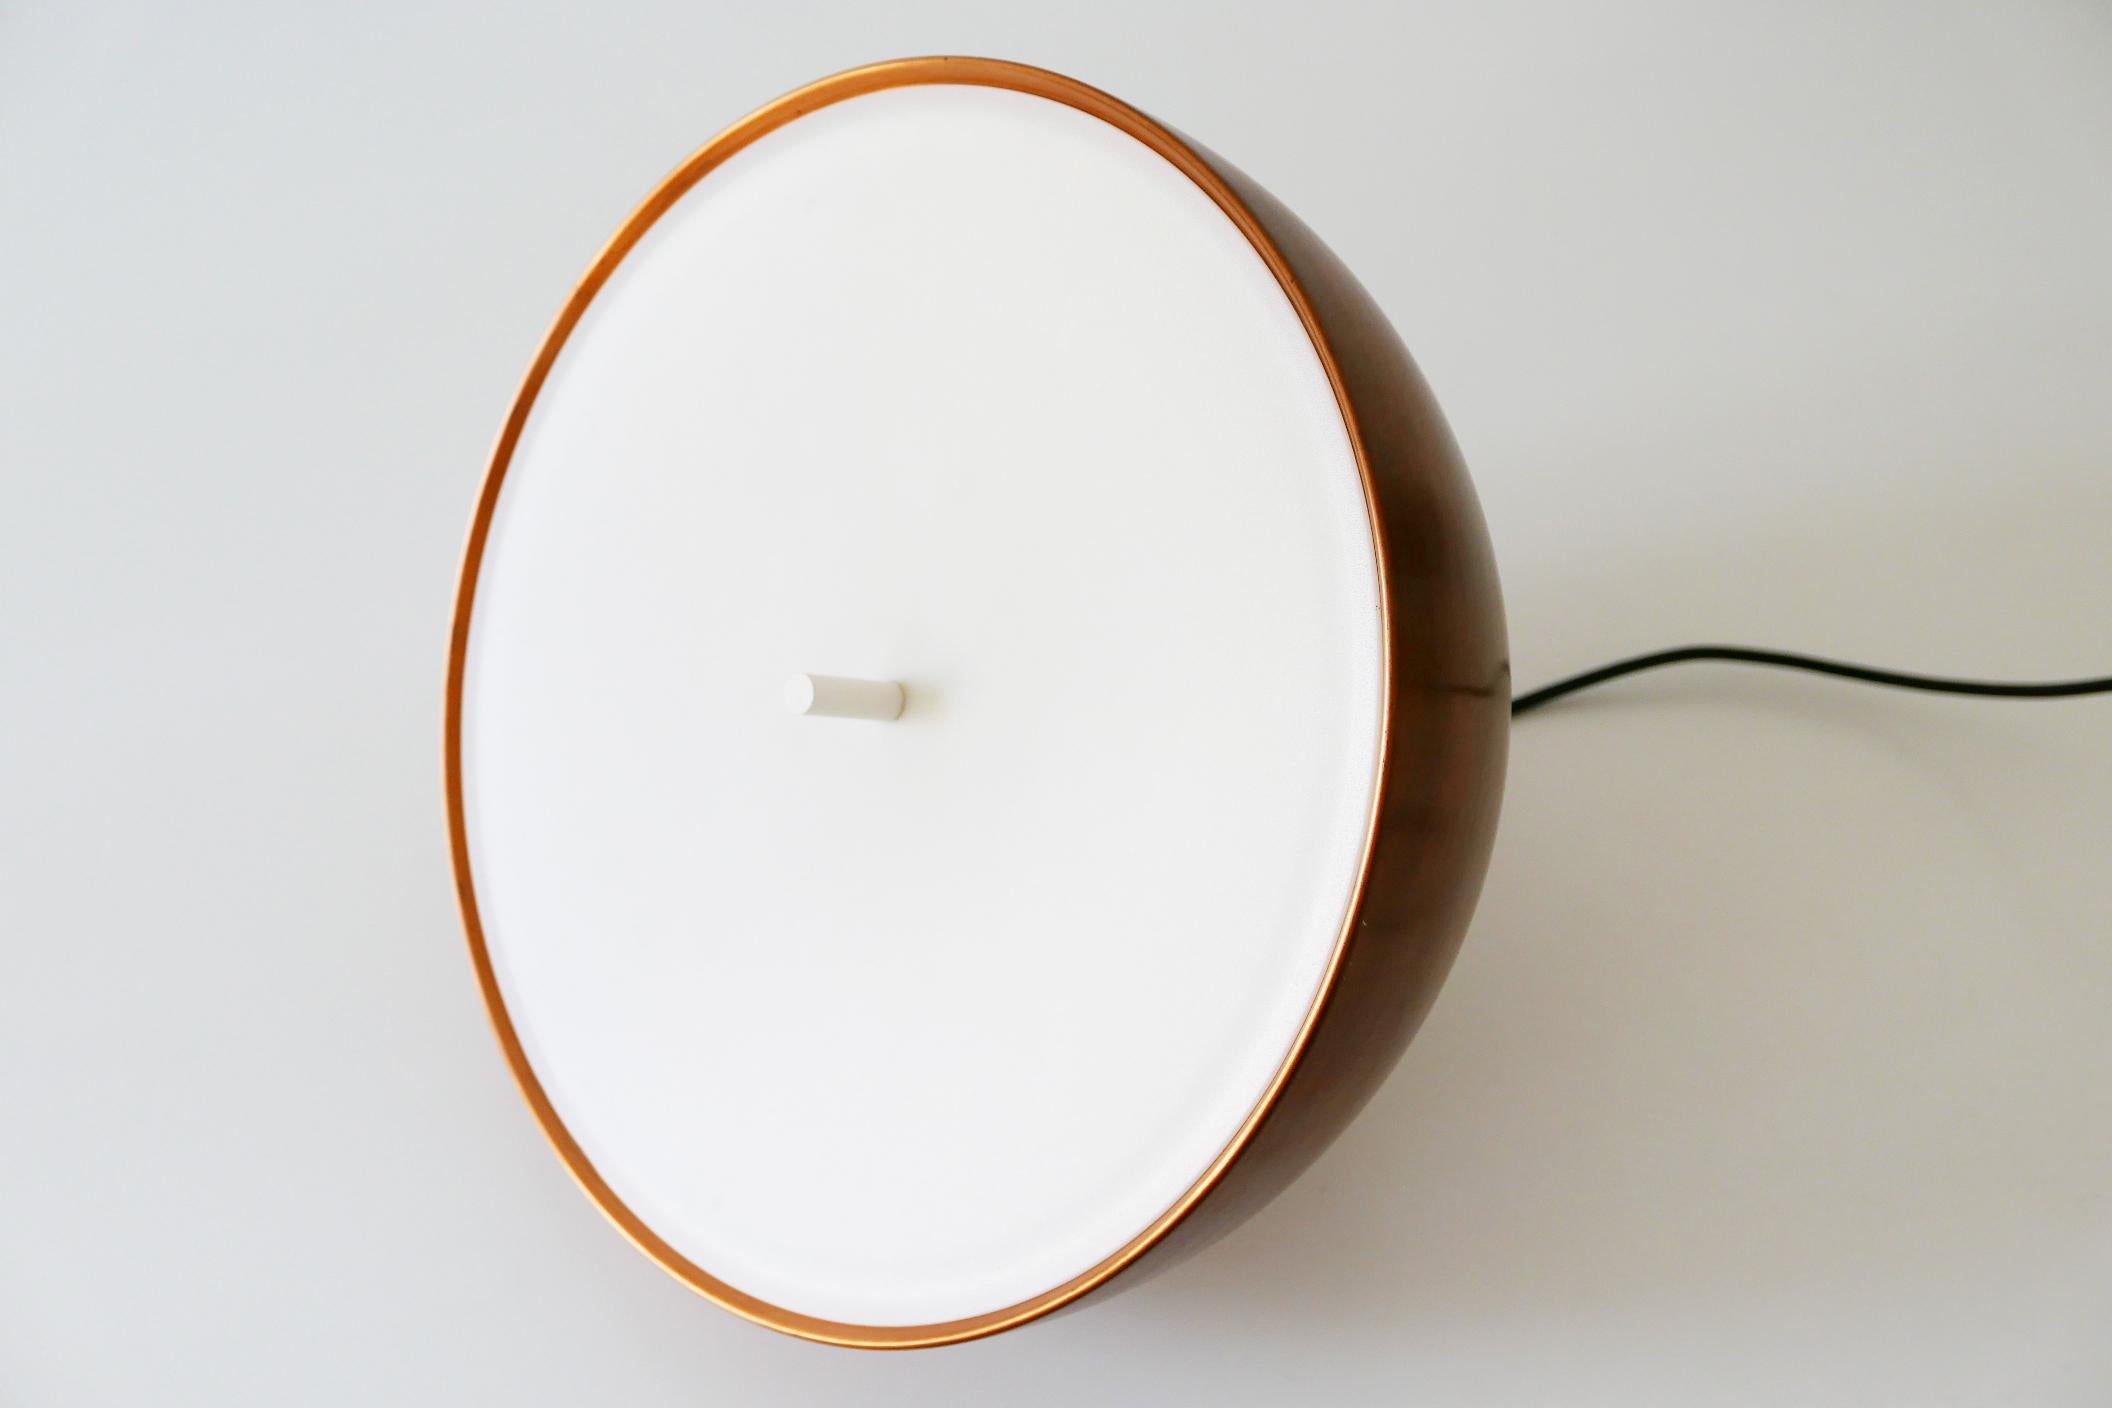 Elegant Mid-Century Modern Copper Pendant Lamp by Staff & Schwarz 1960s, Germany For Sale 13